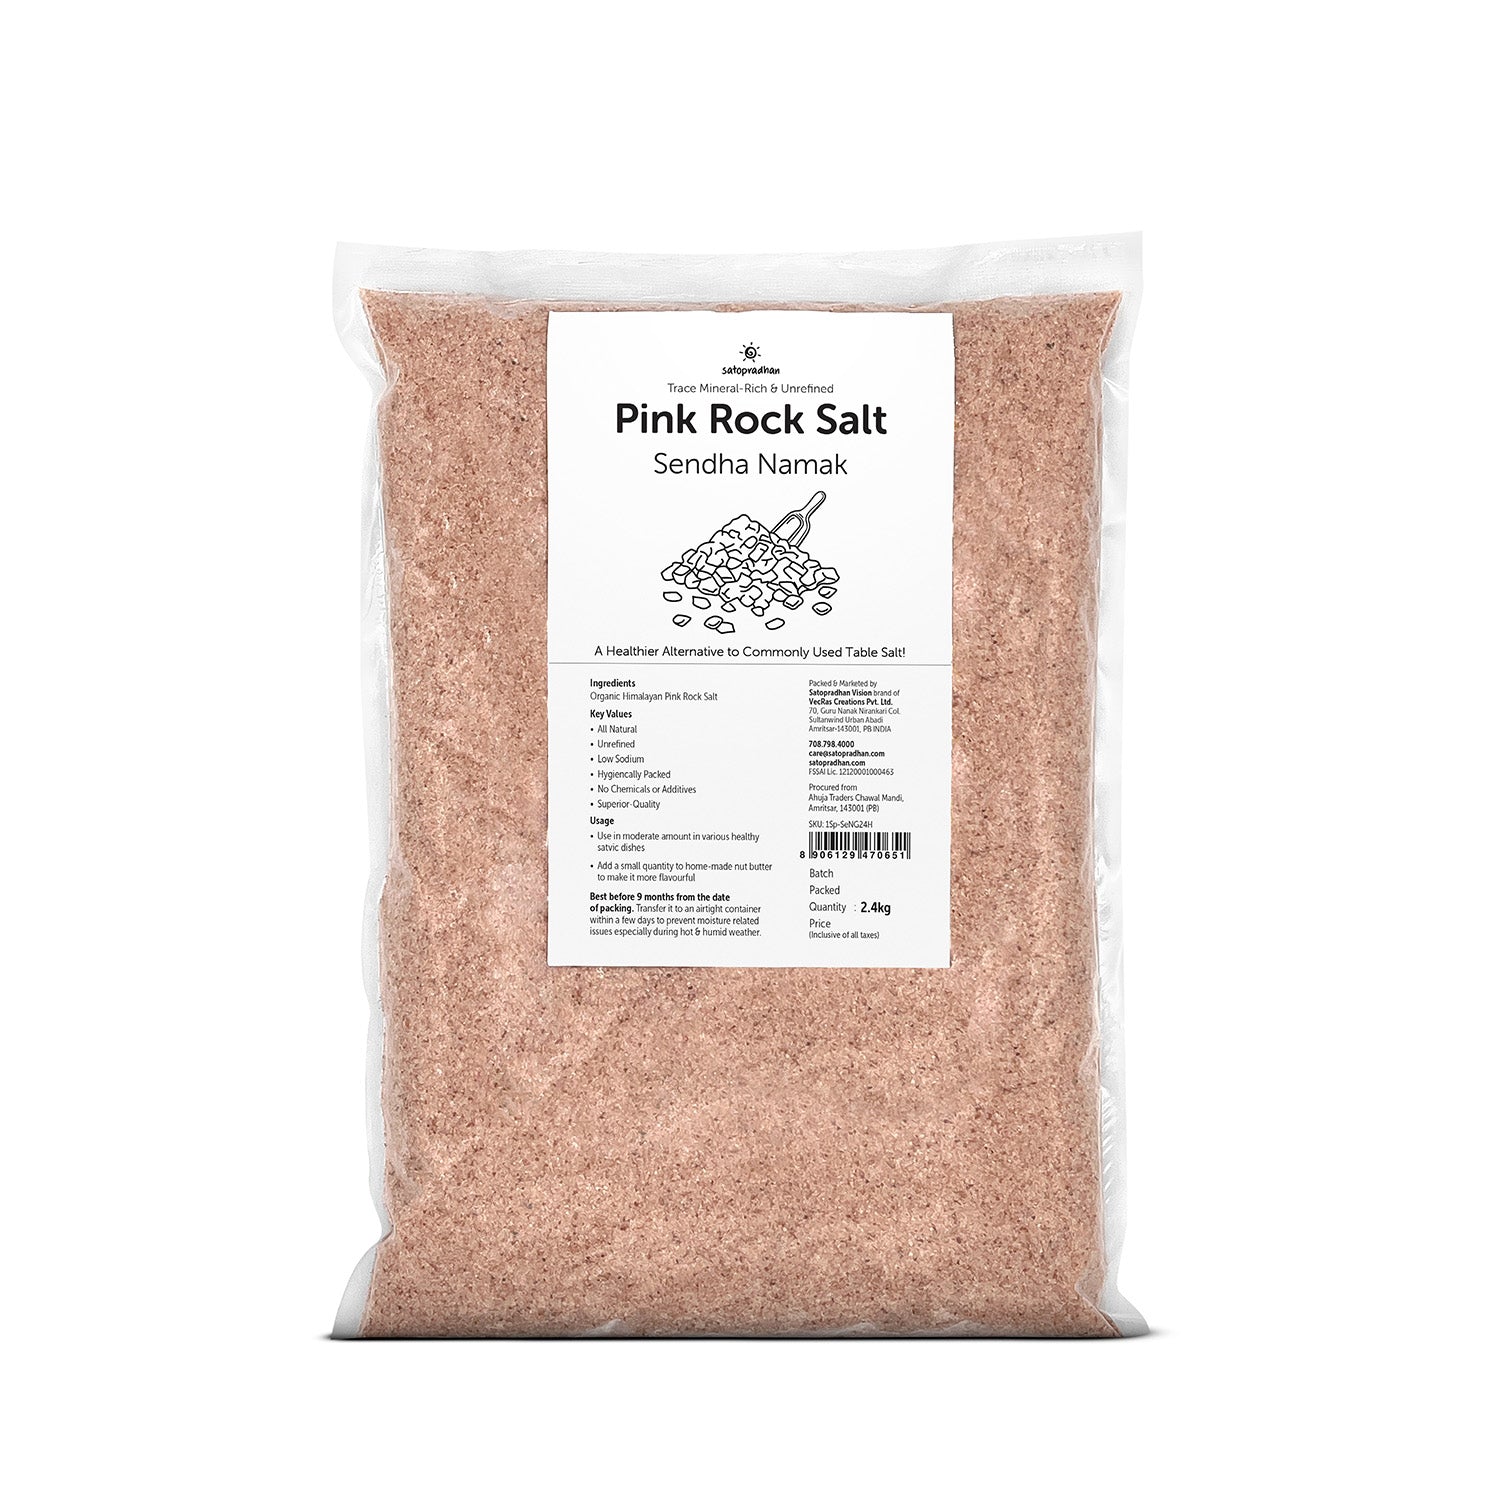 Pink Rock Salt 2.4Kg - 100% Natural & Pure Himalayan Gulabi Sendha Namak - Unadulterated Packaging